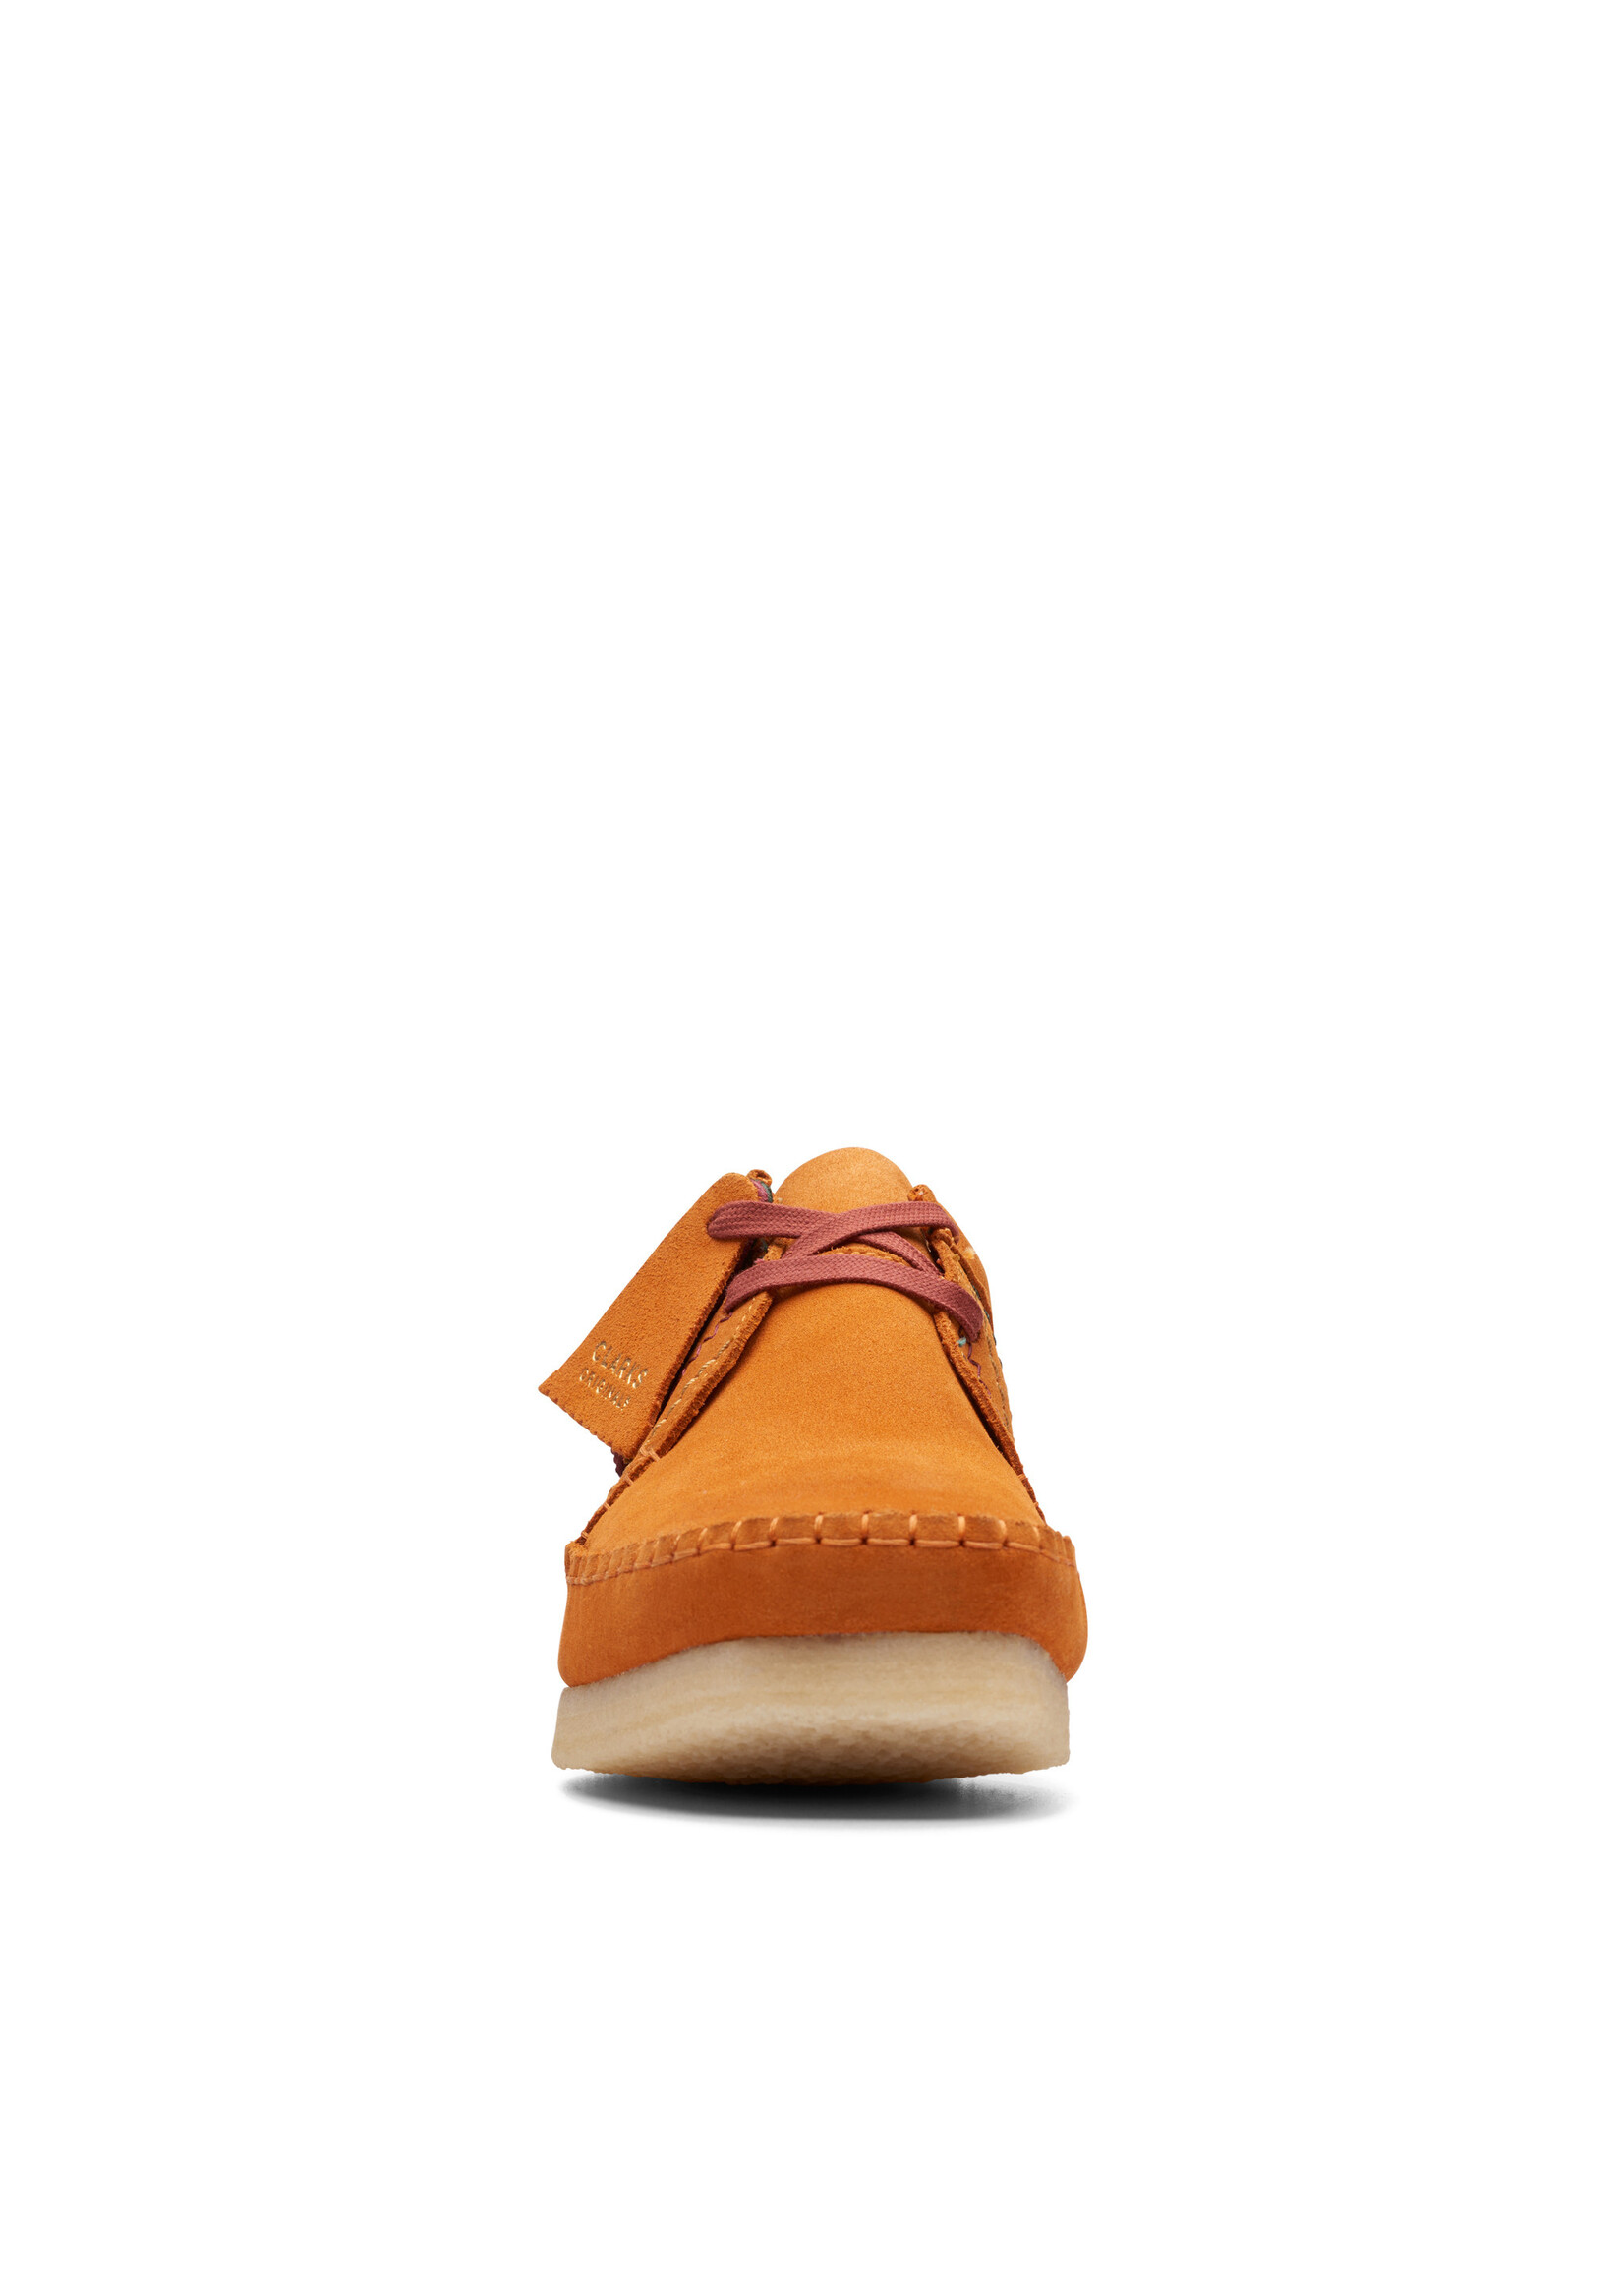 Mens Weaver Originals Shoes Burnt Orange Combination | 26174517